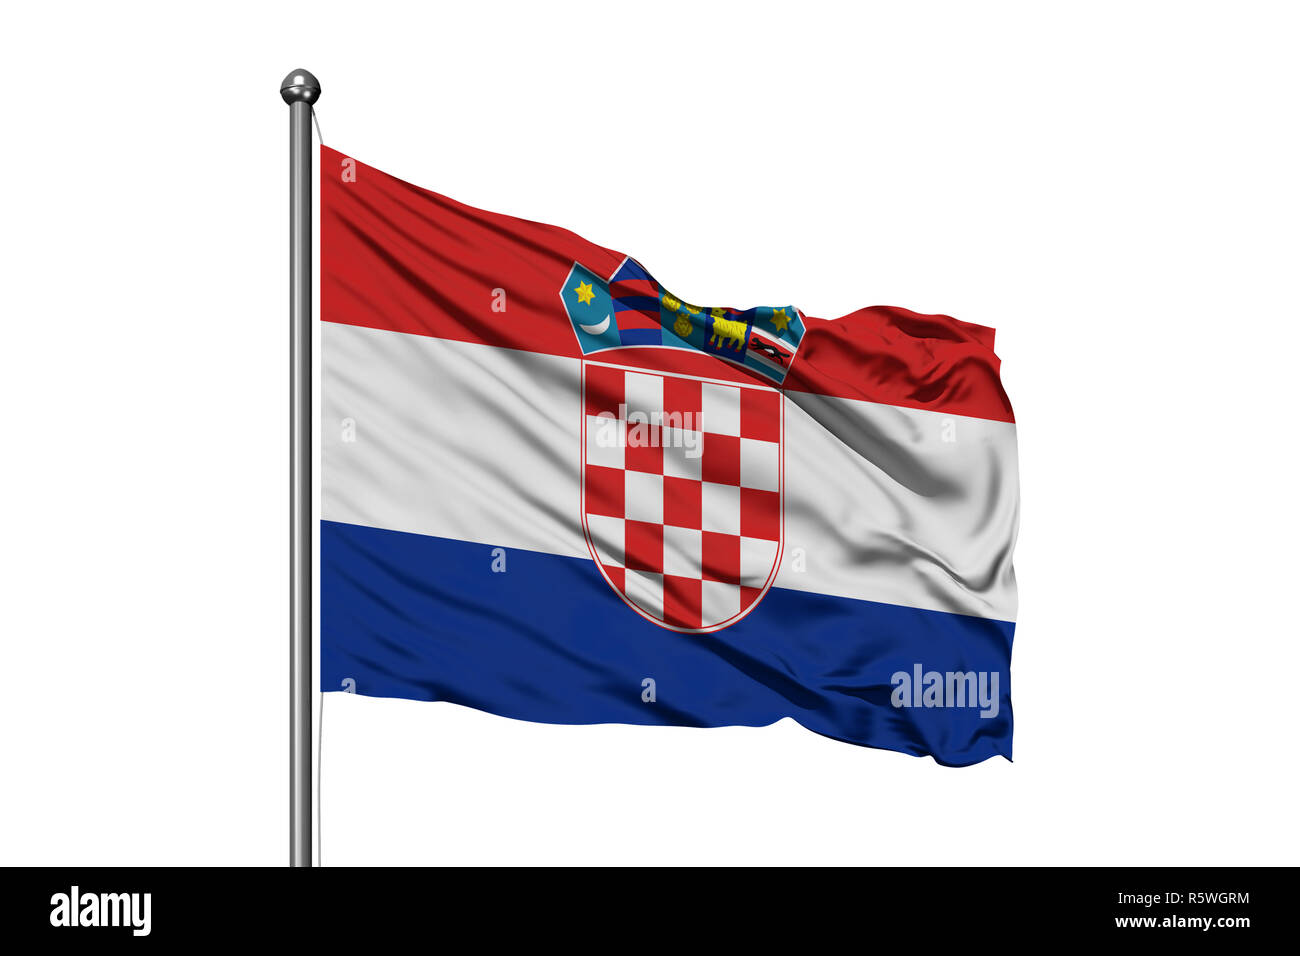 Flag of Croatia waving in the wind, isolated white background. Croatian flag. Stock Photo